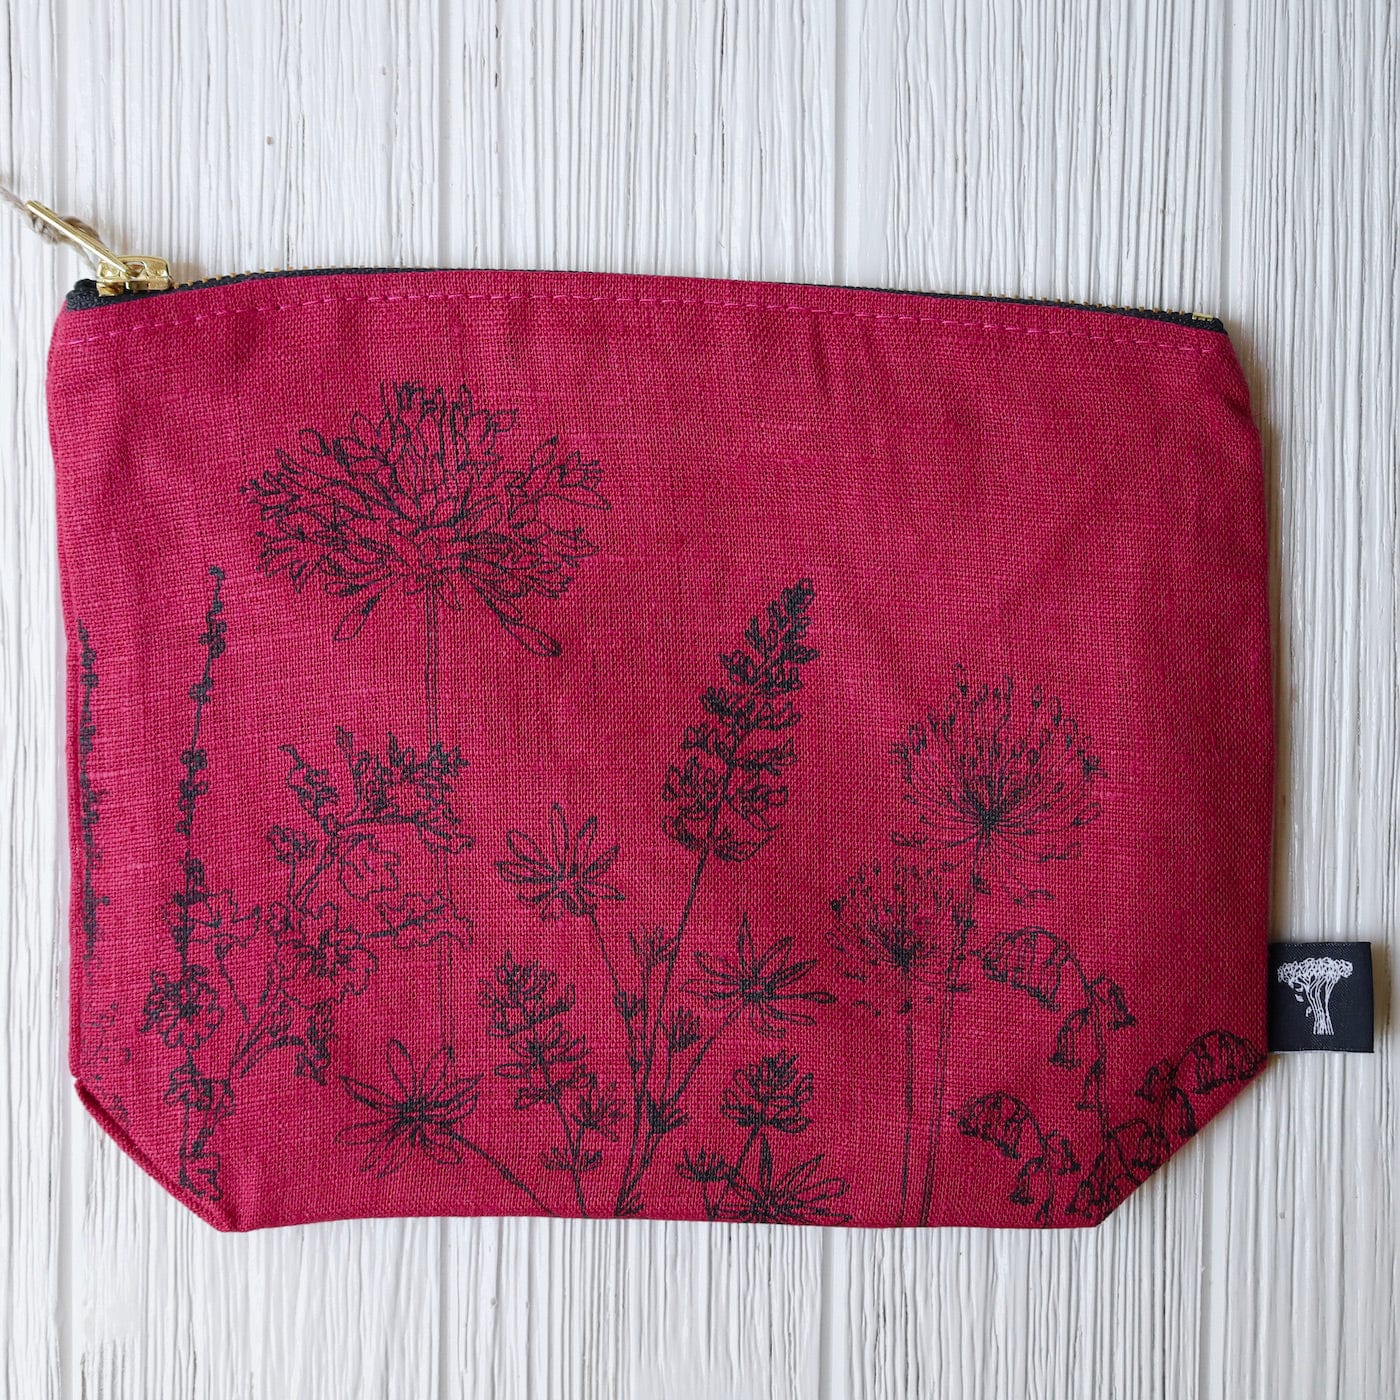 GIFT Garden Toiletry Bag ~ Raspberry Red Linen